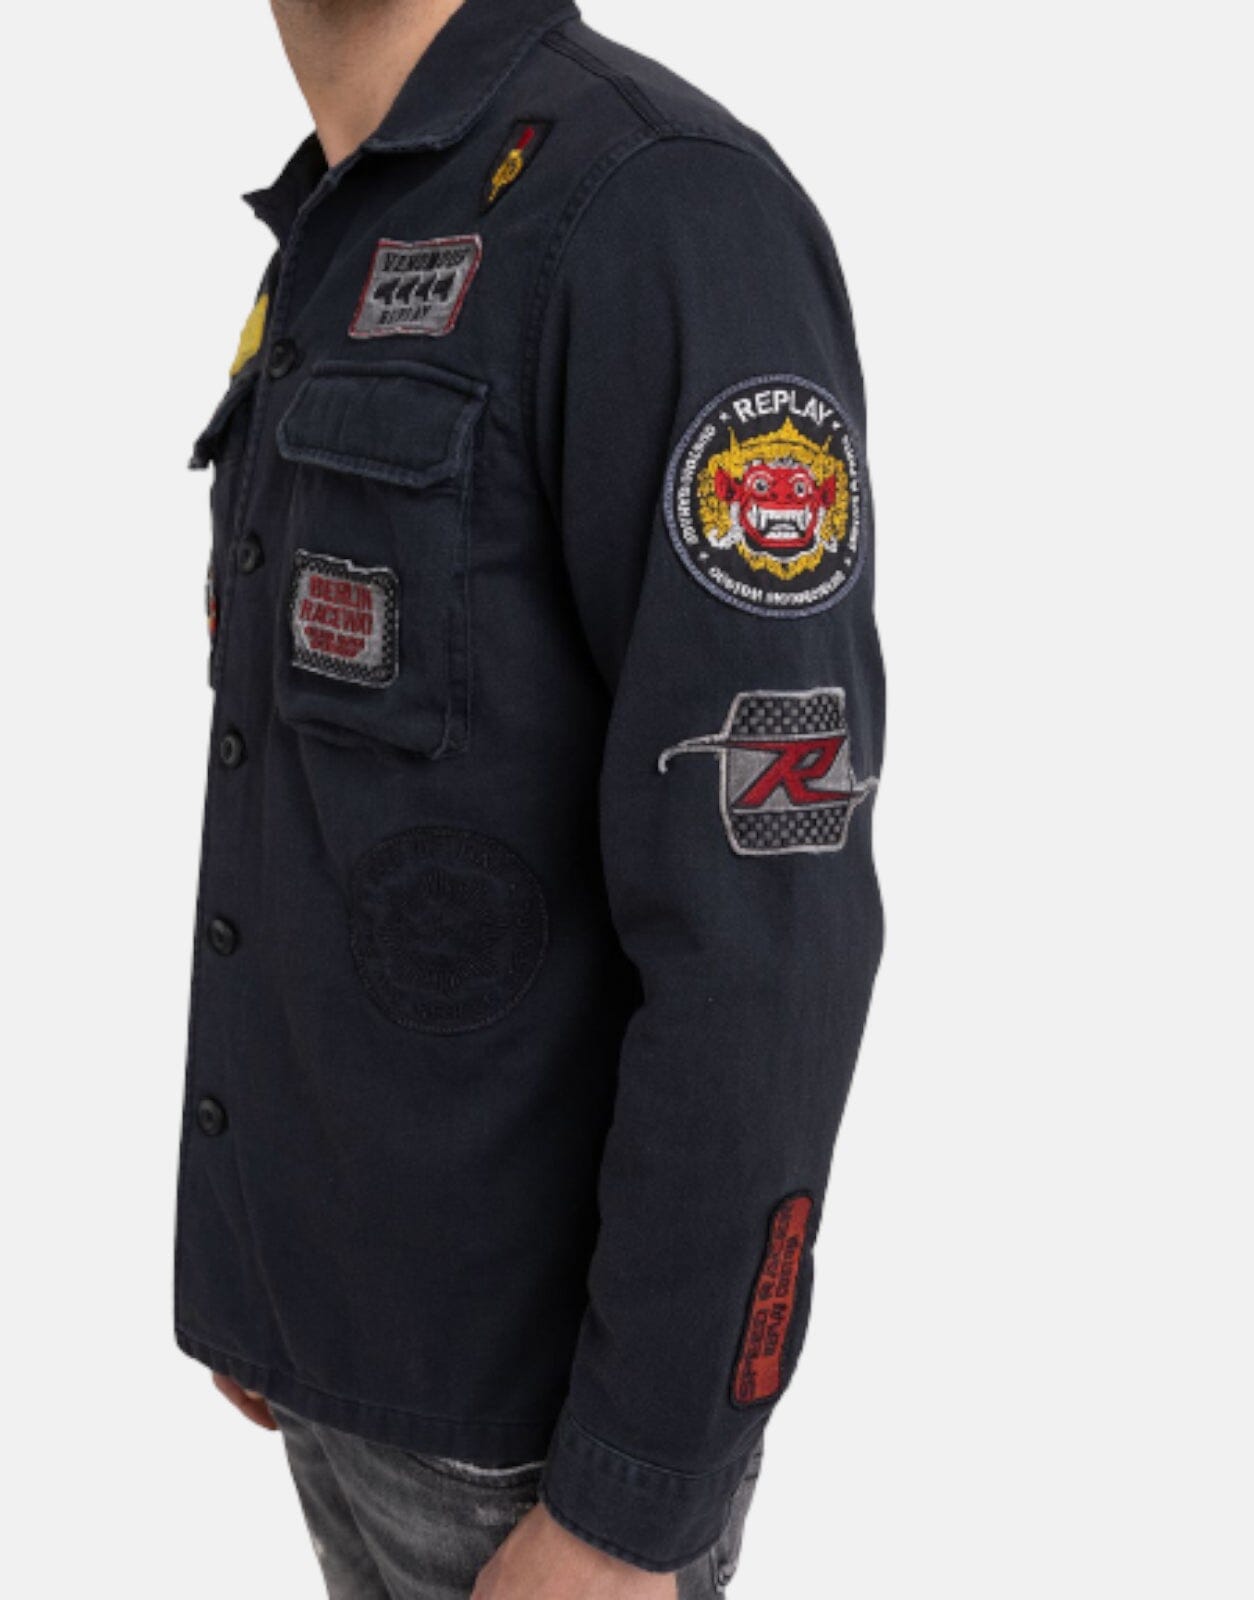 Replay Multi Badge Hell On Wheels Black Jacket - Subwear